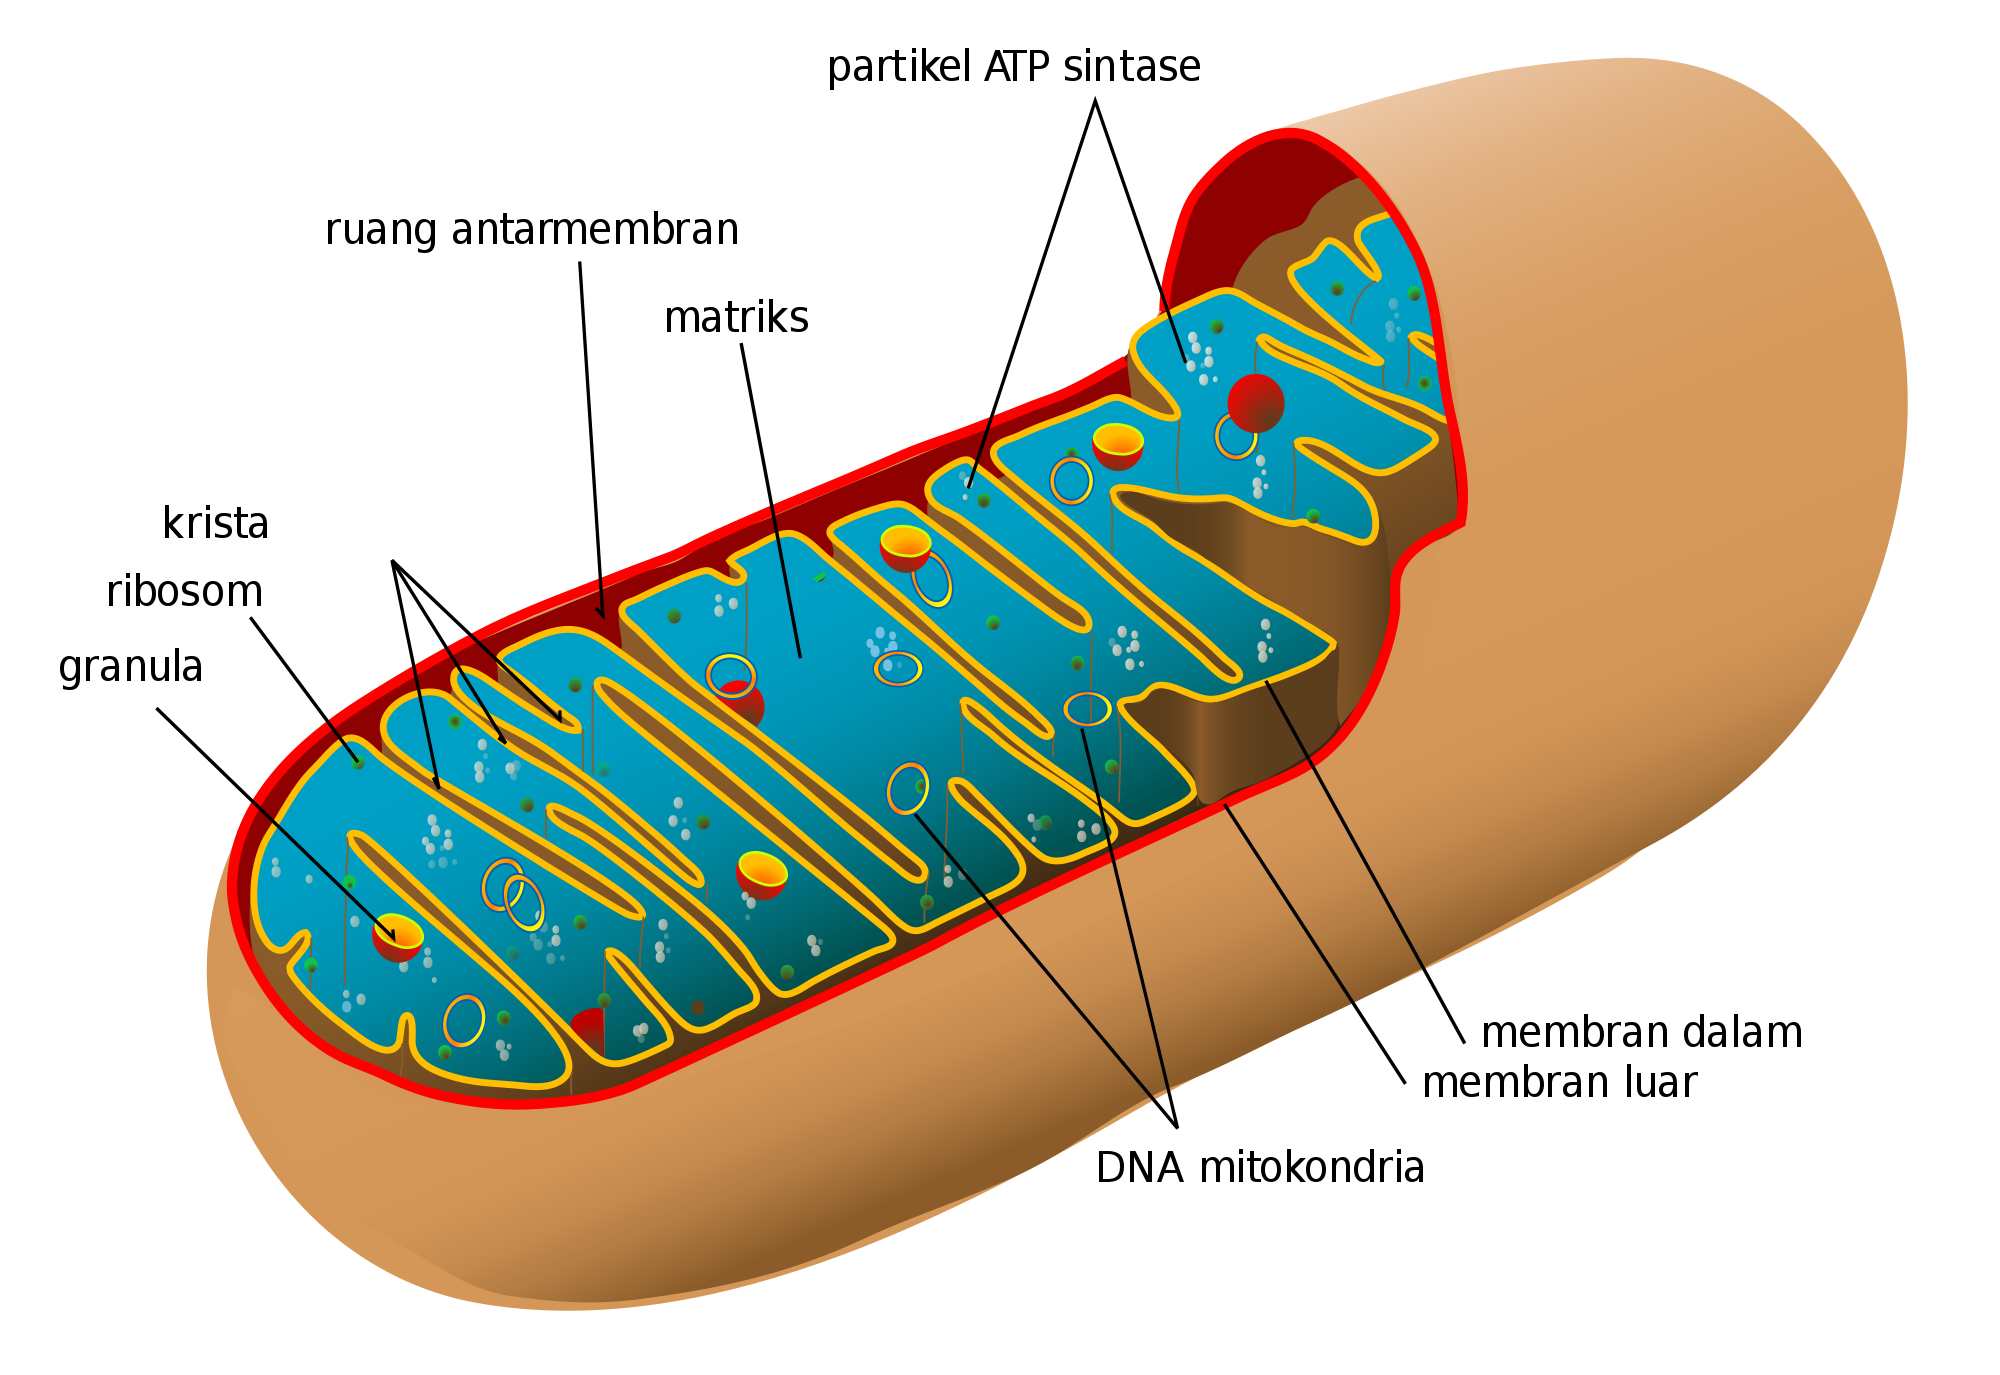 https://upload.wikimedia.org/wikipedia/commons/thumb/e/ed/Animal_mitochondrion_diagram_id.svg/